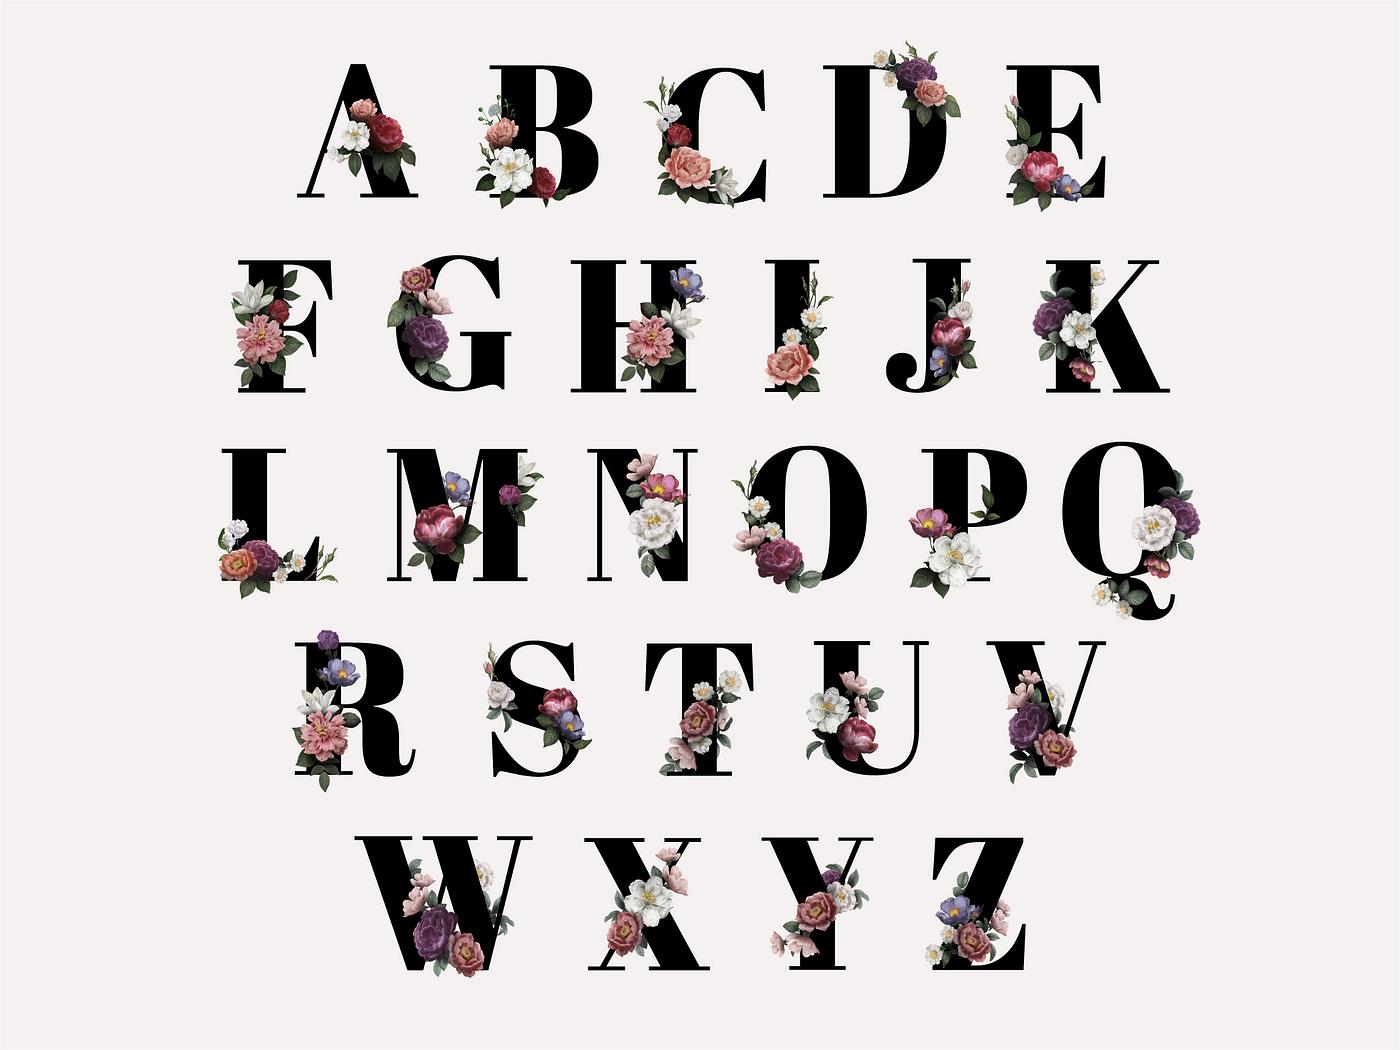 Download Floral alphabet font | Free stock vector - 583152